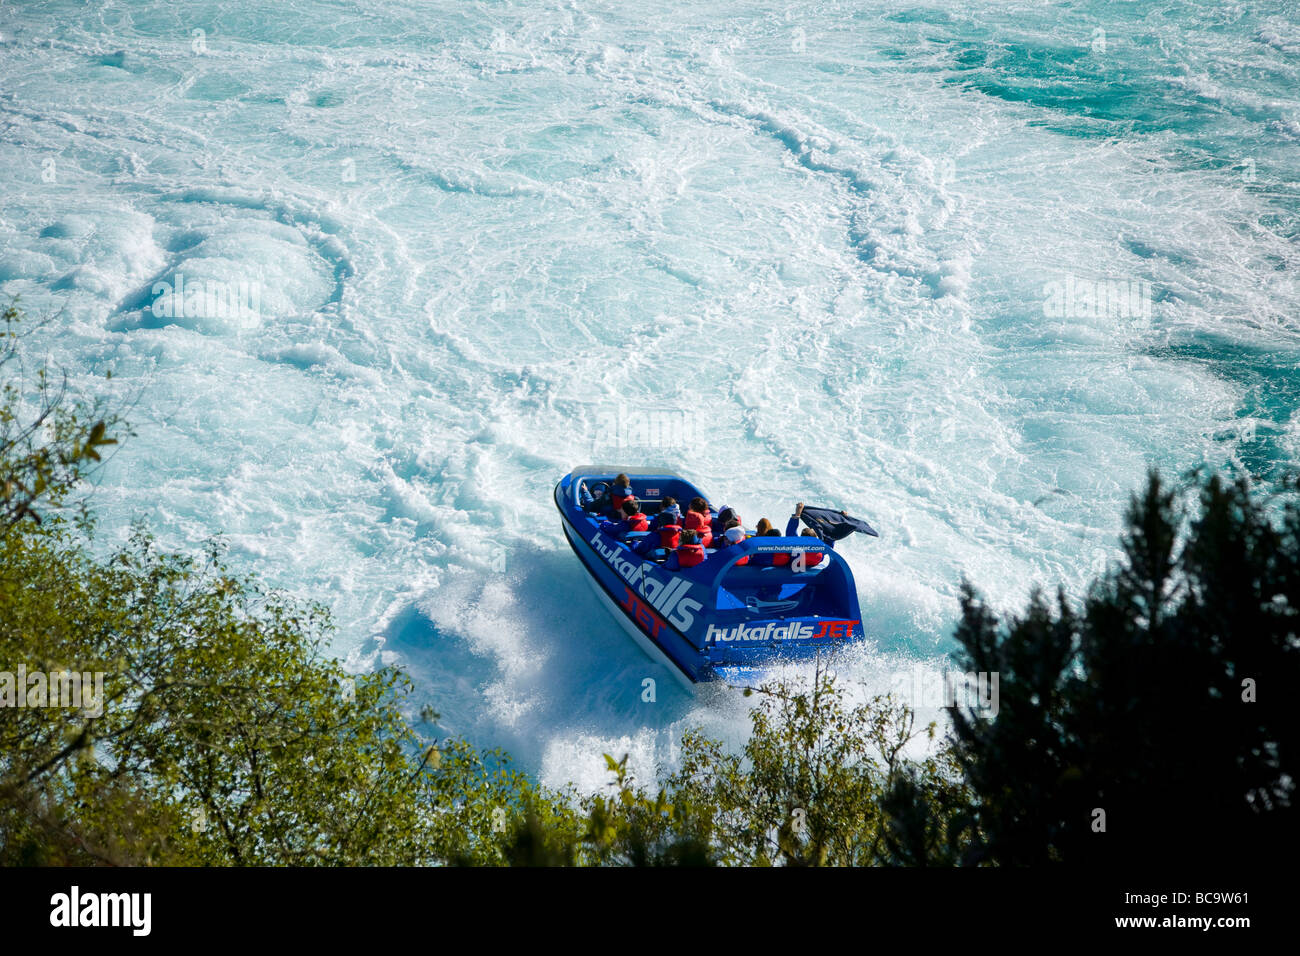 Nervenkitzel sucht Touristen auf Jet-Boot, Huka Falls, New Zealand Stockfoto